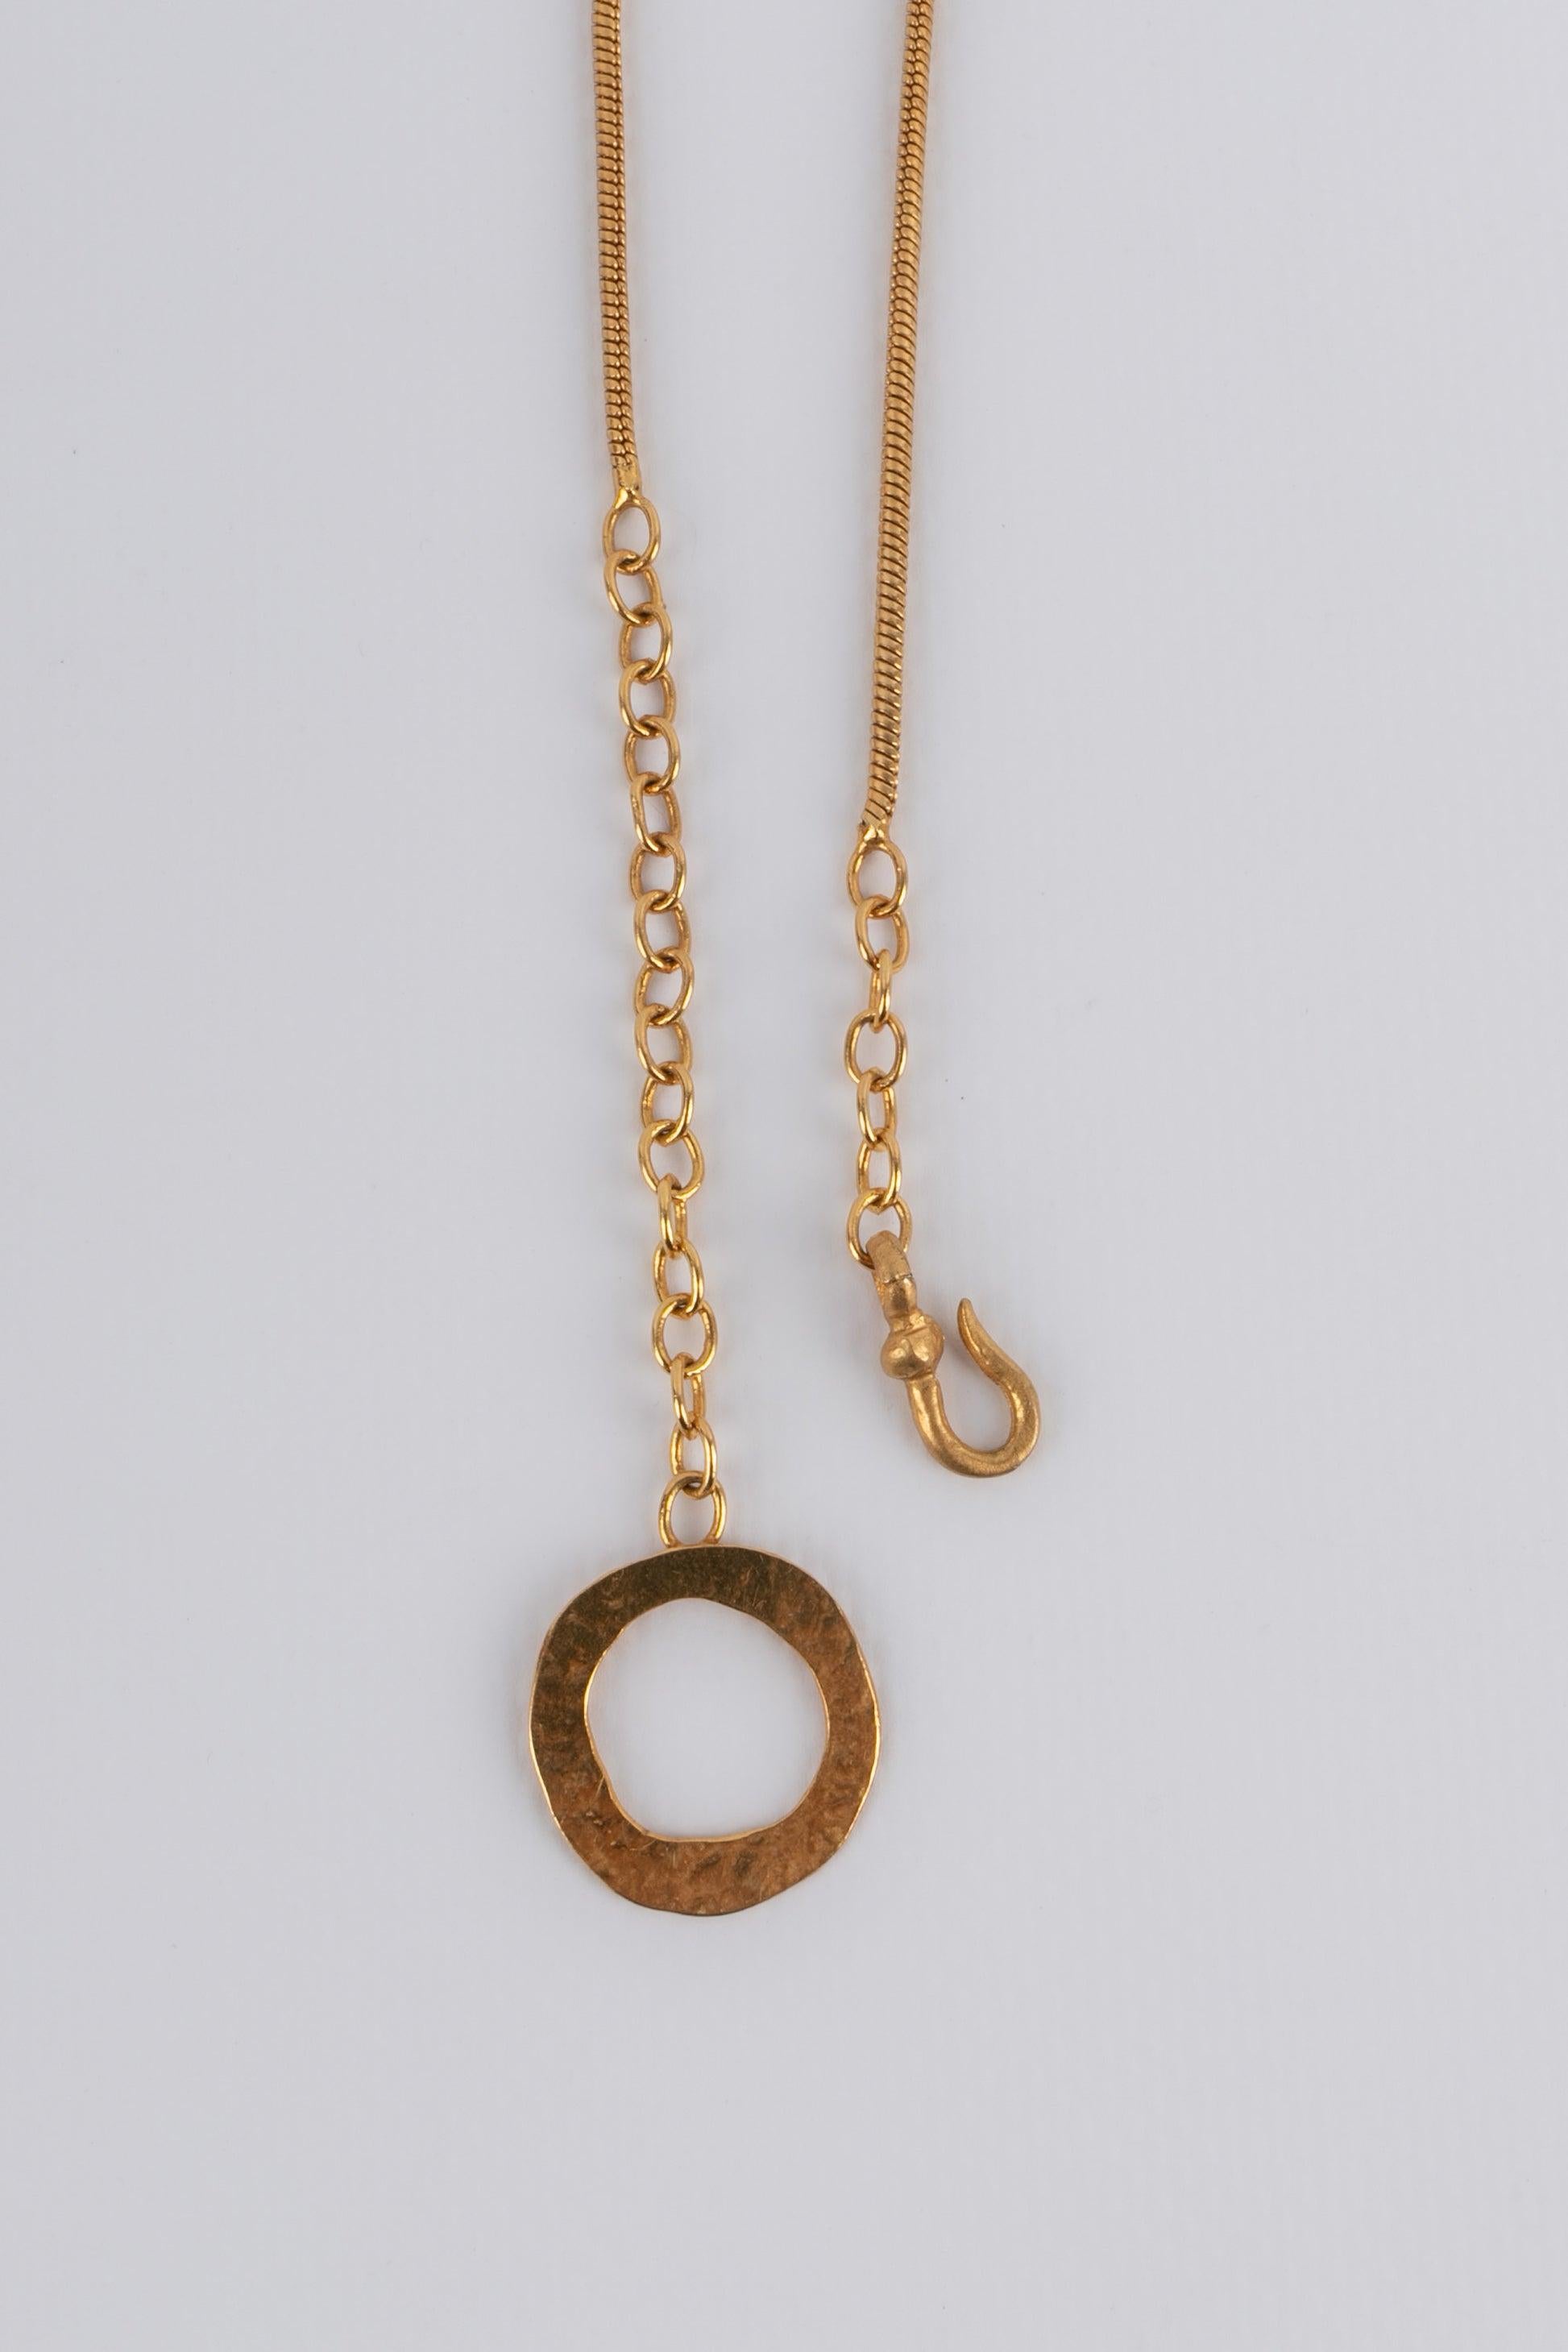 Van Der Straeten Golden Beaten Brass Necklace, 2000s 1